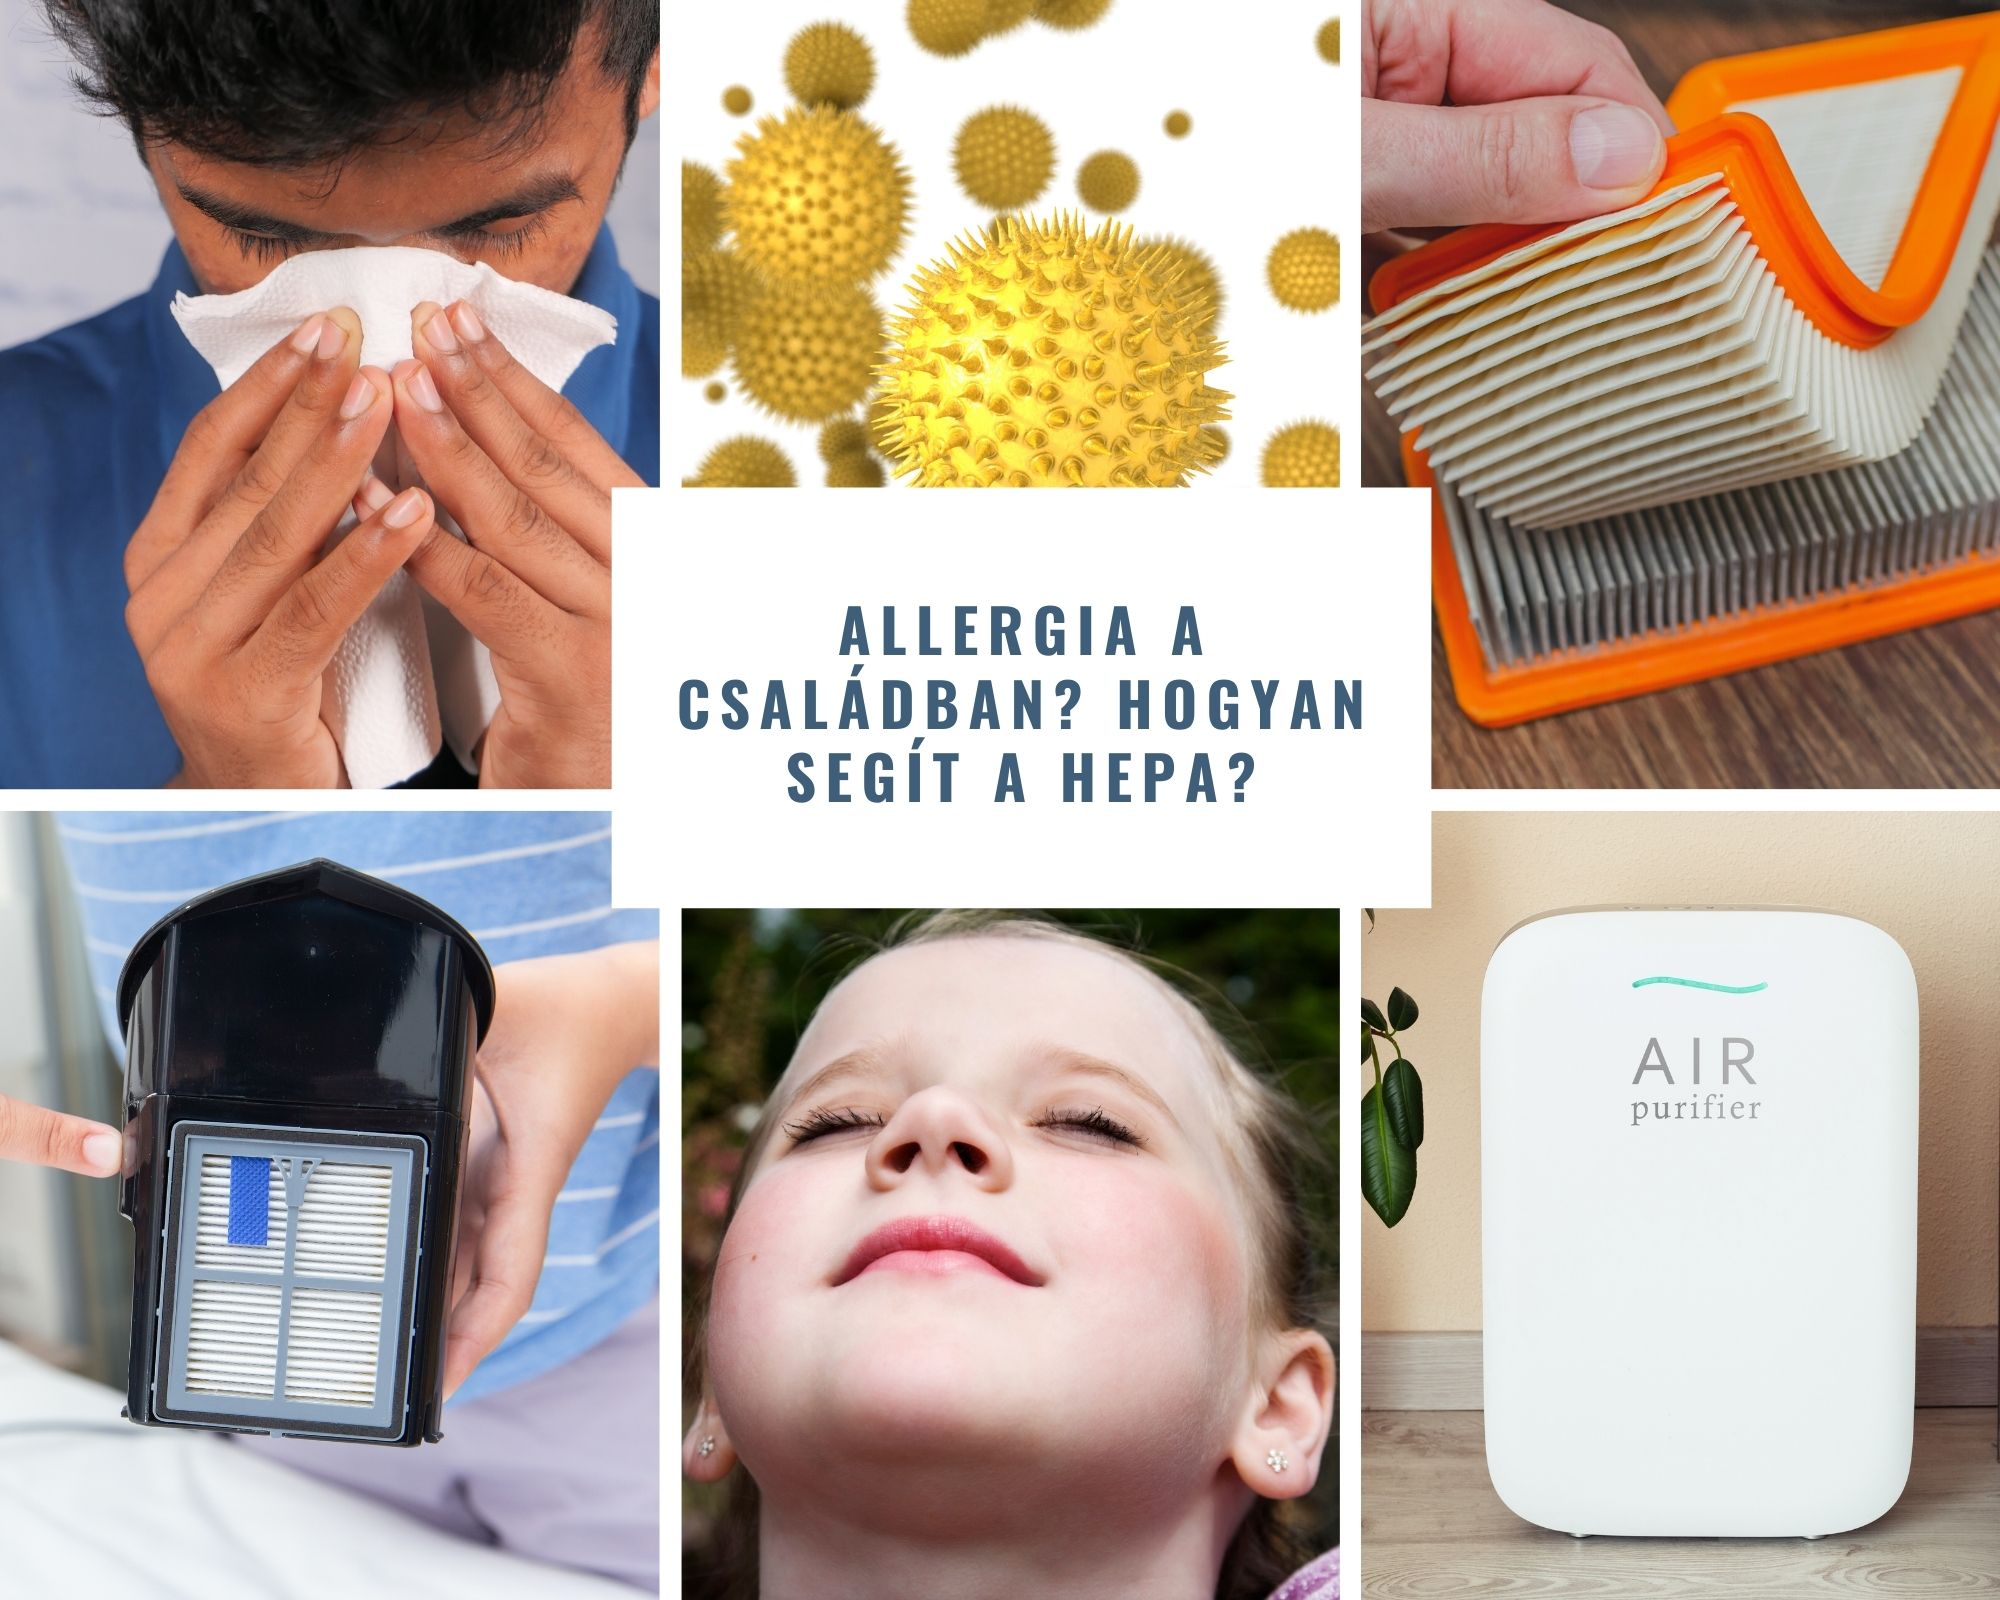 Allergia a családban?